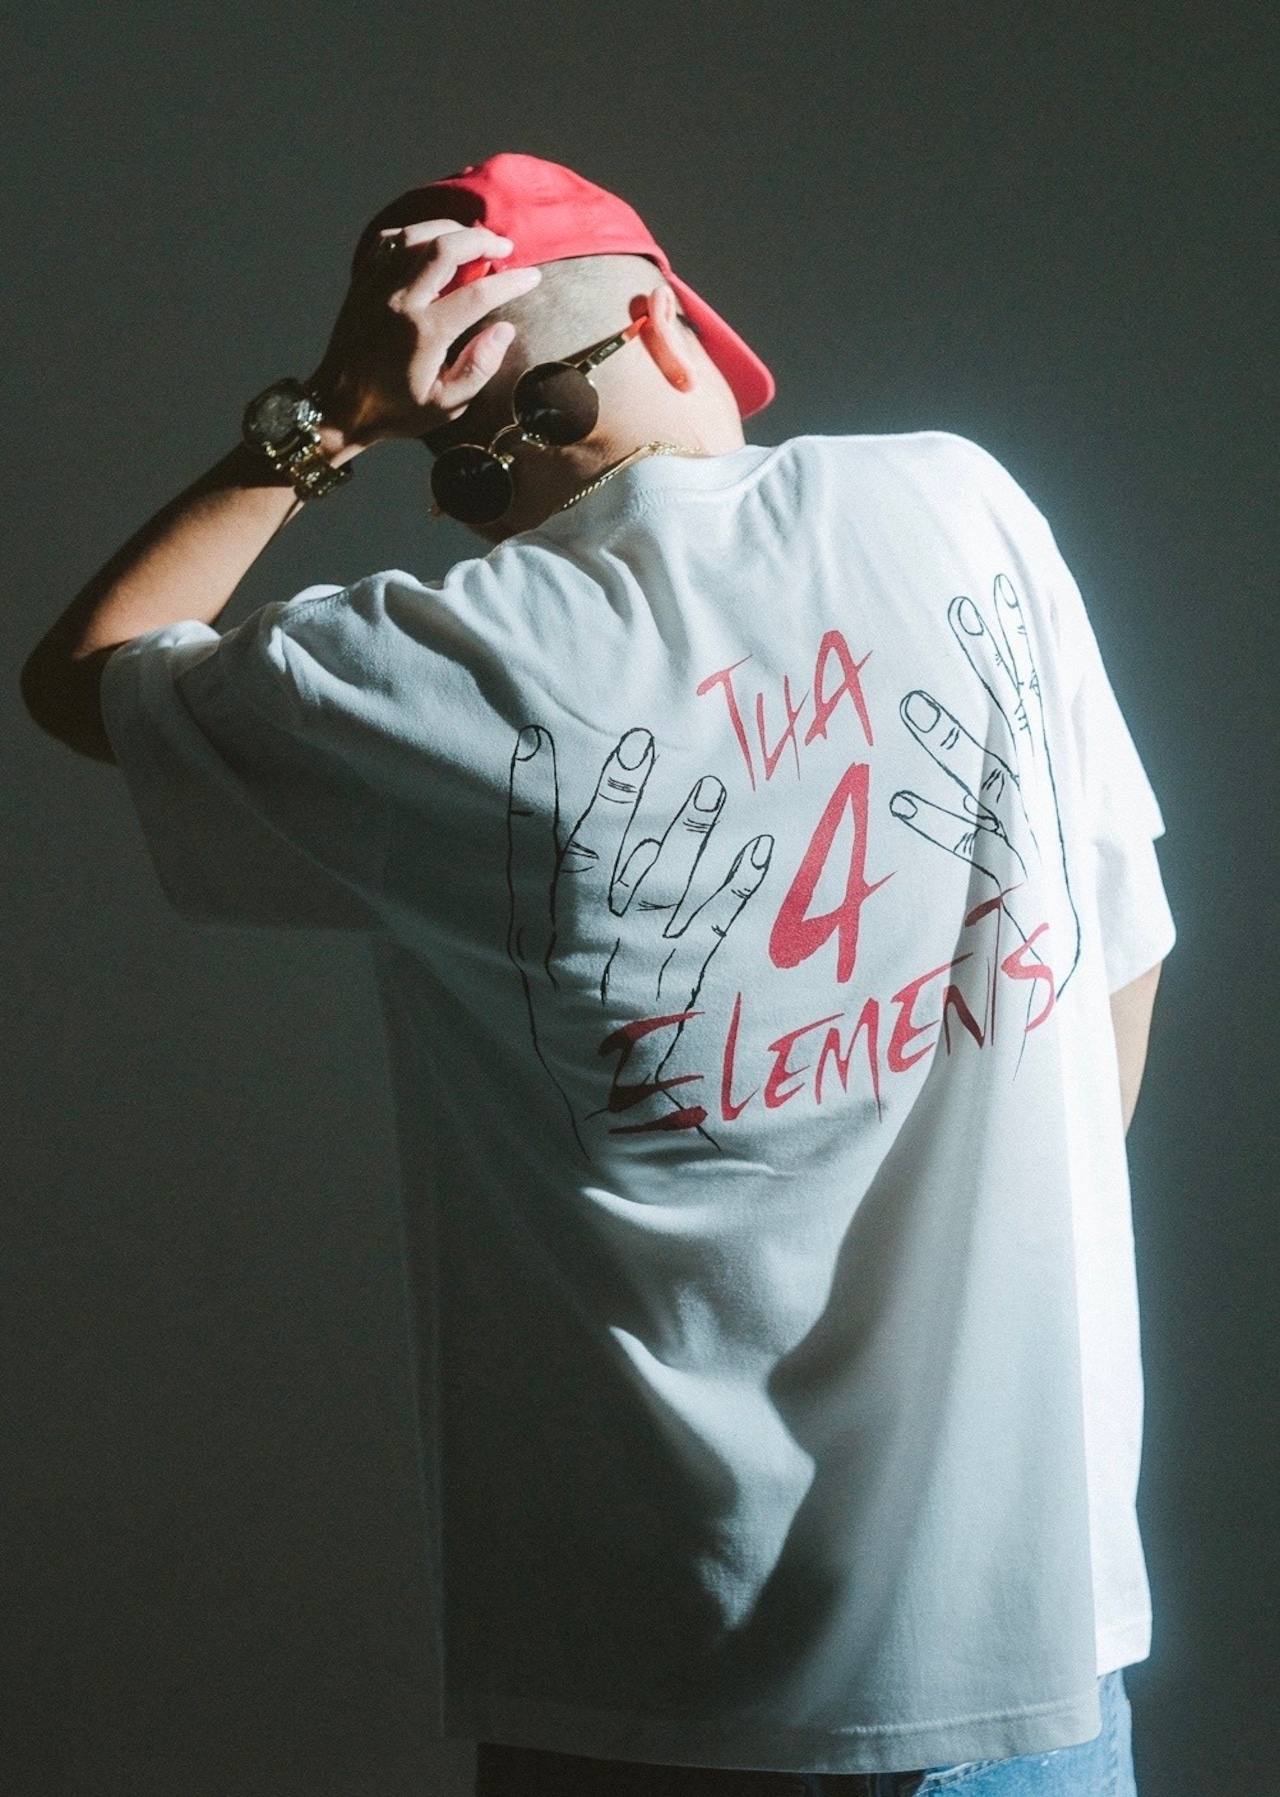 "ELEMENTS" T-Shirt (White)